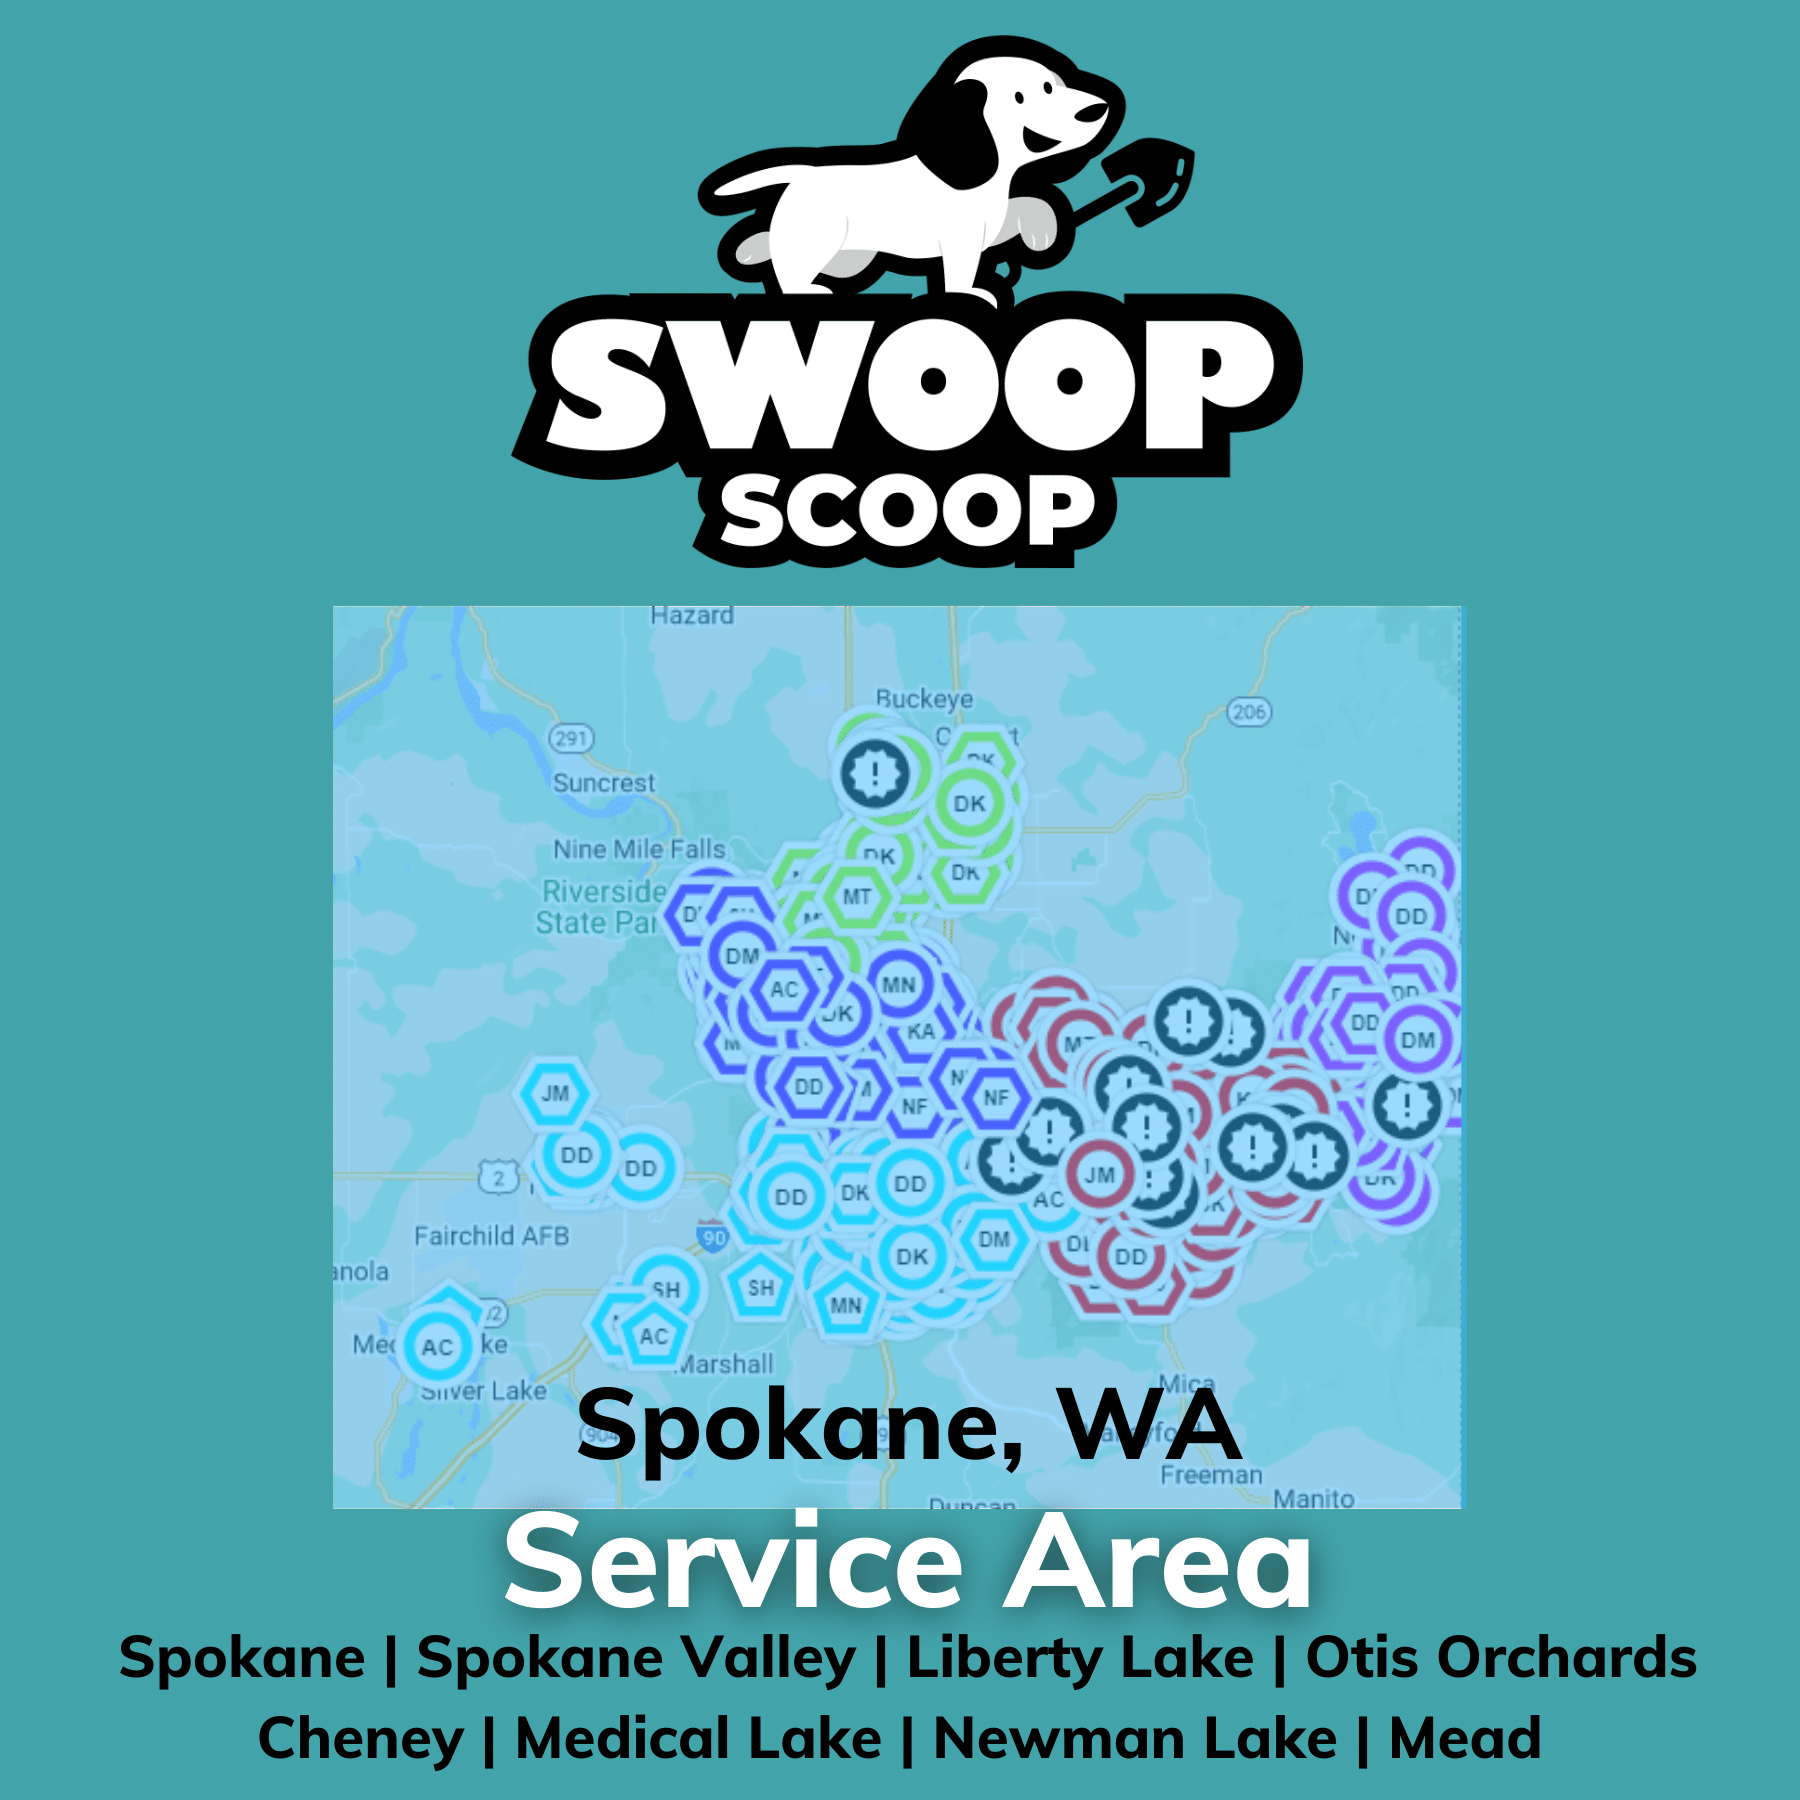 Swoop Scoop dog waste removal service area in Spokane, WA